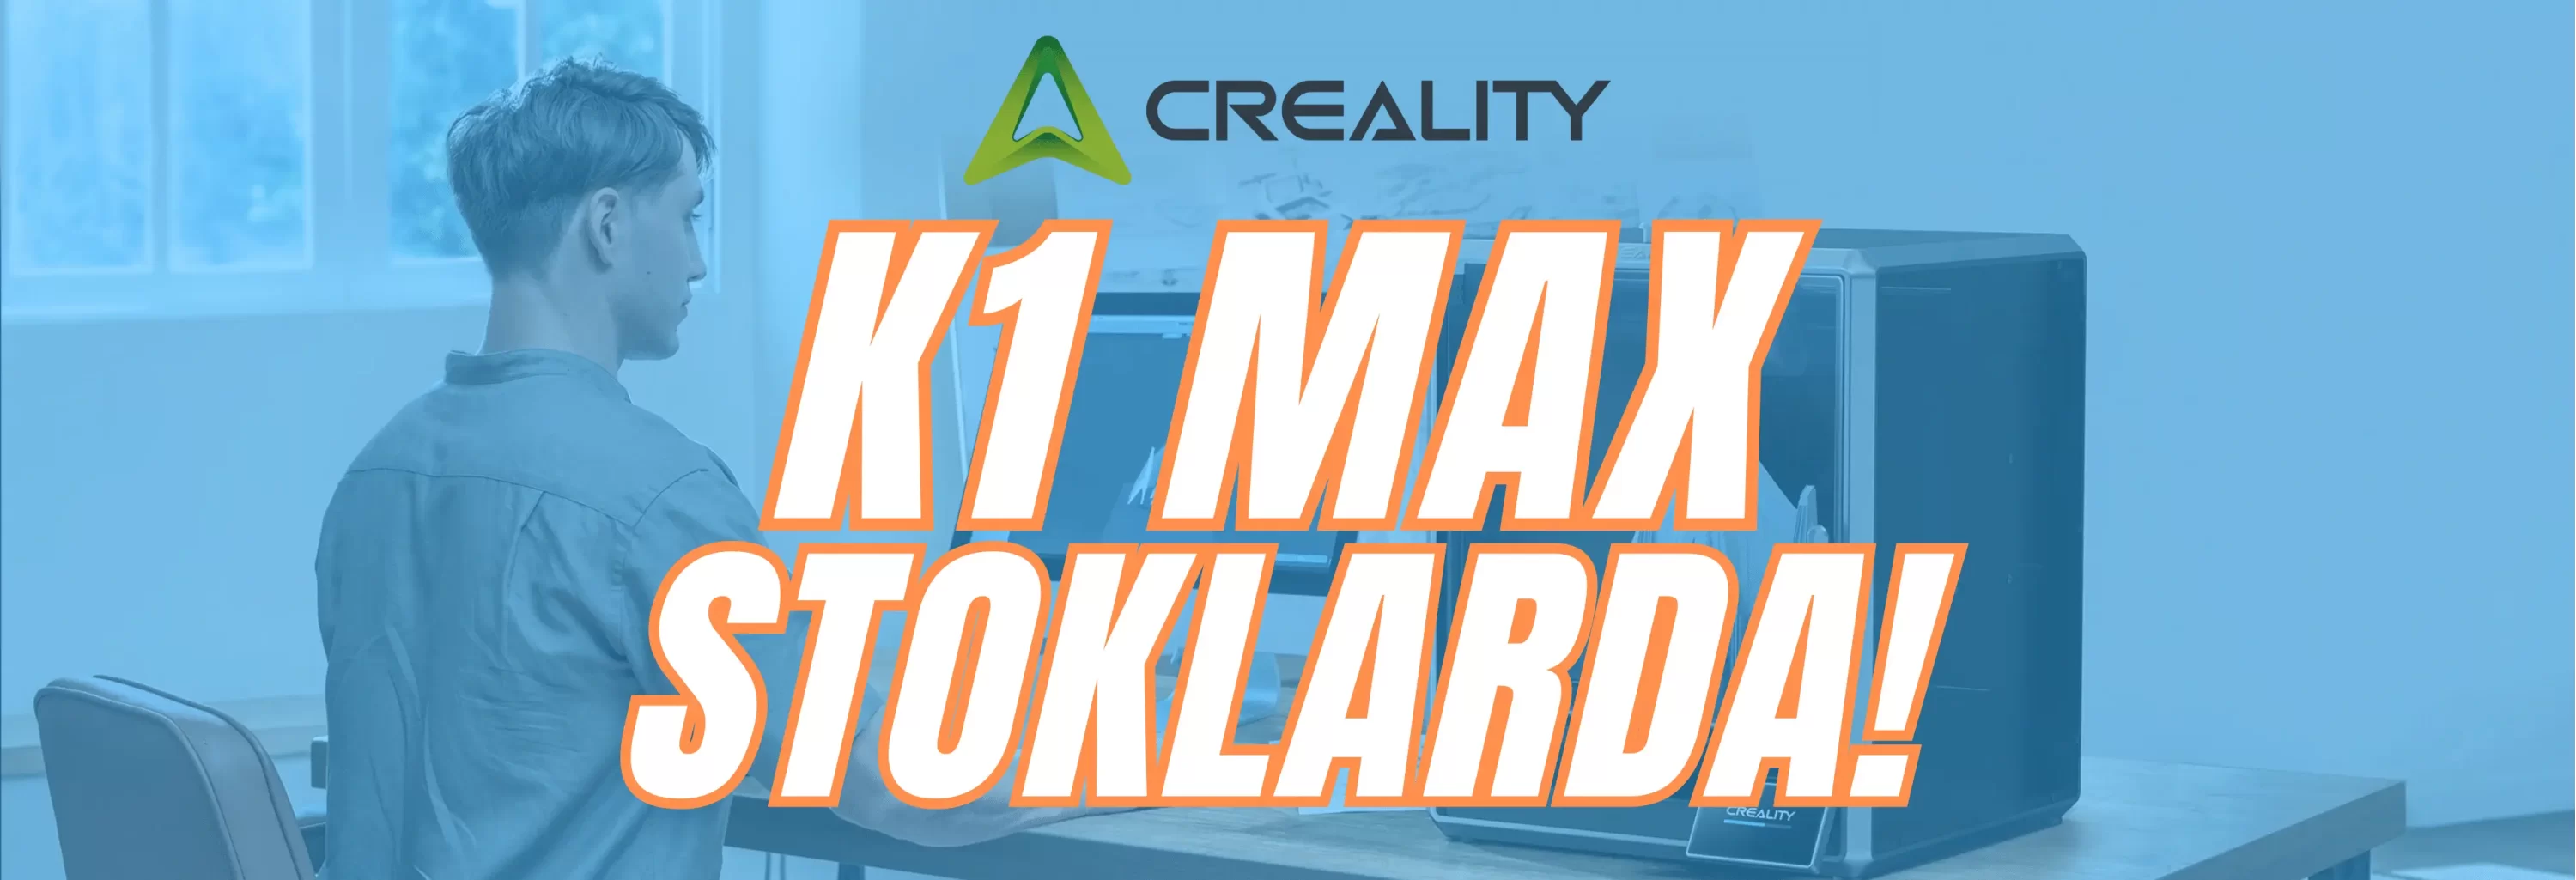 Creality K1 MAX STOKLARDA